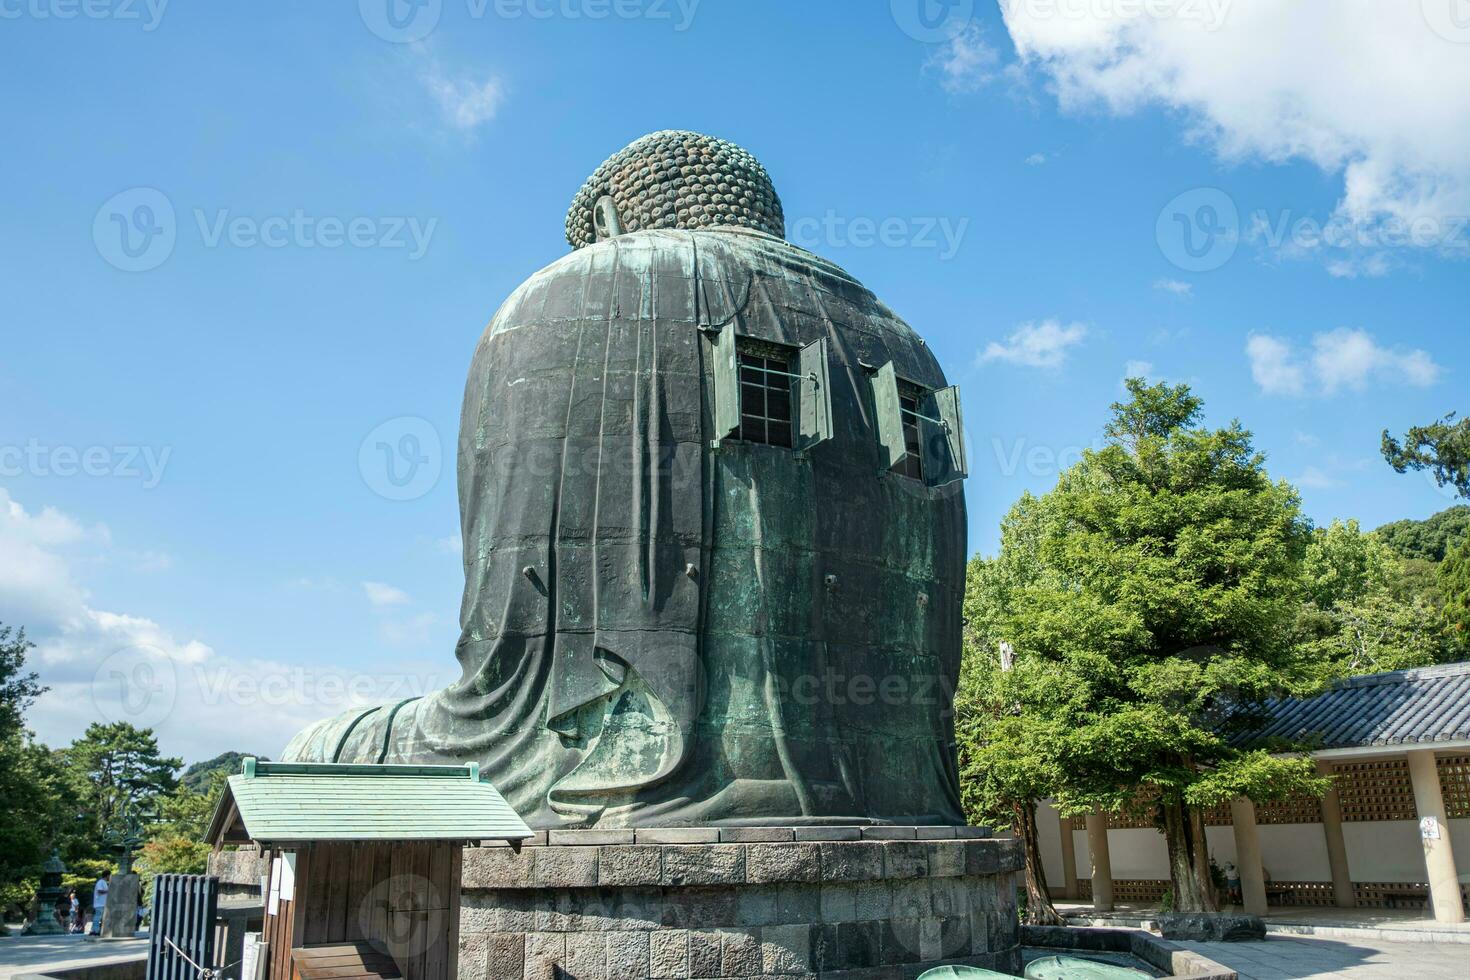 de Super goed blauw Boeddha standbeeld kamakura daibutsu Bij kotoku in altaar tempel in kamakura,kanagawa, Japan foto